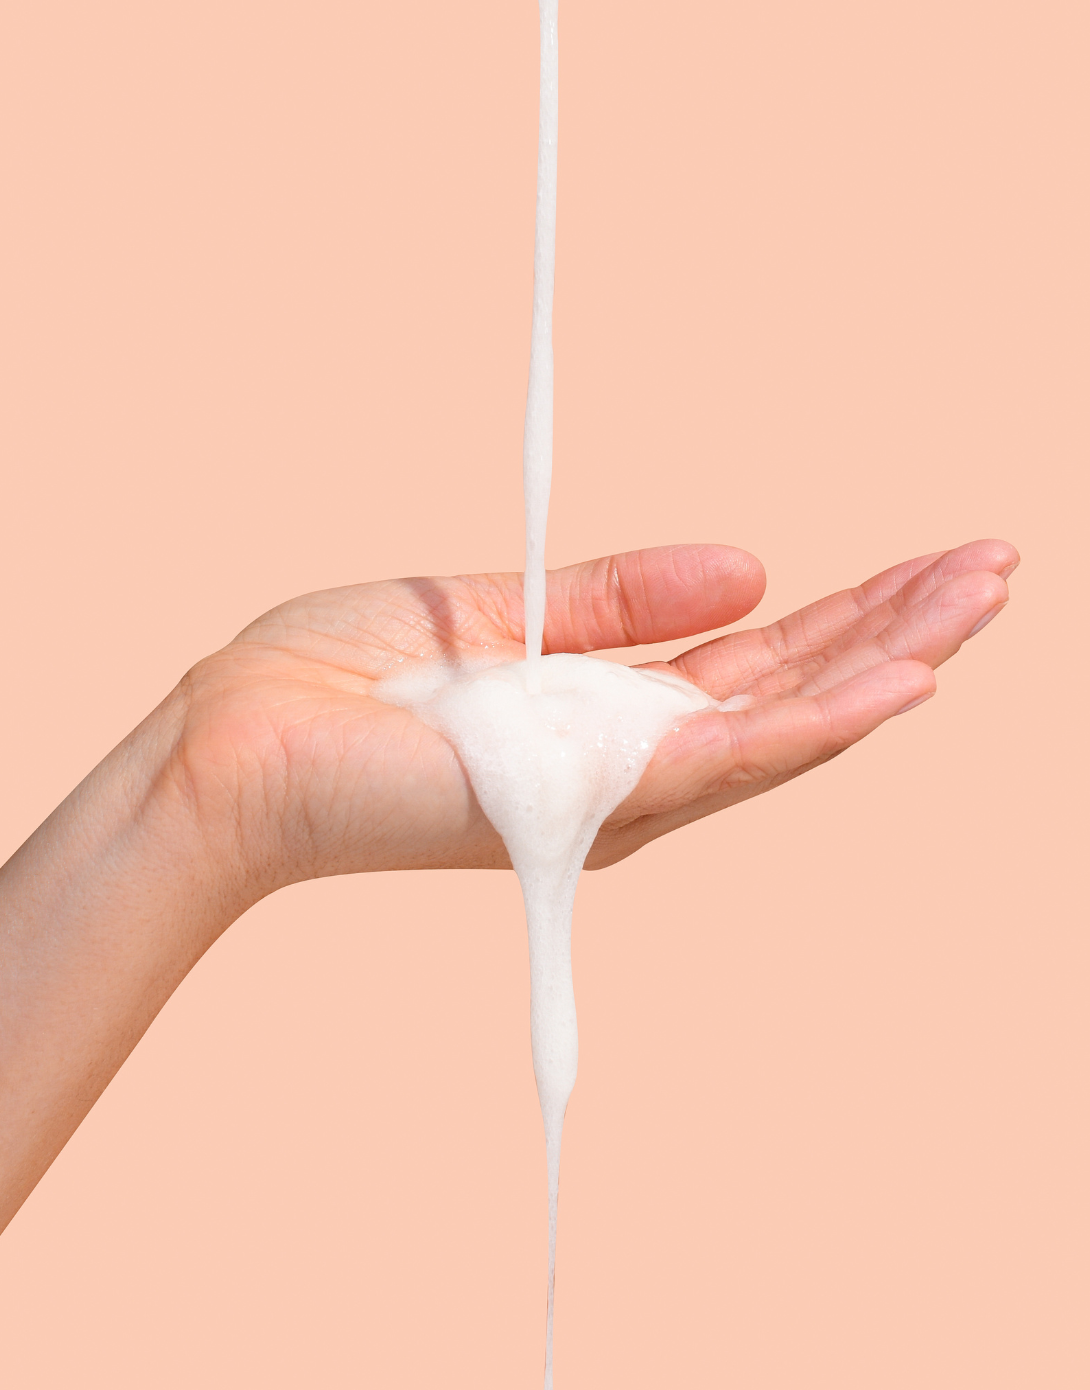 EpZen Powder To Gel Body Wash Refill Pack 2x20g, Coconut Cream & Vanilla Bean